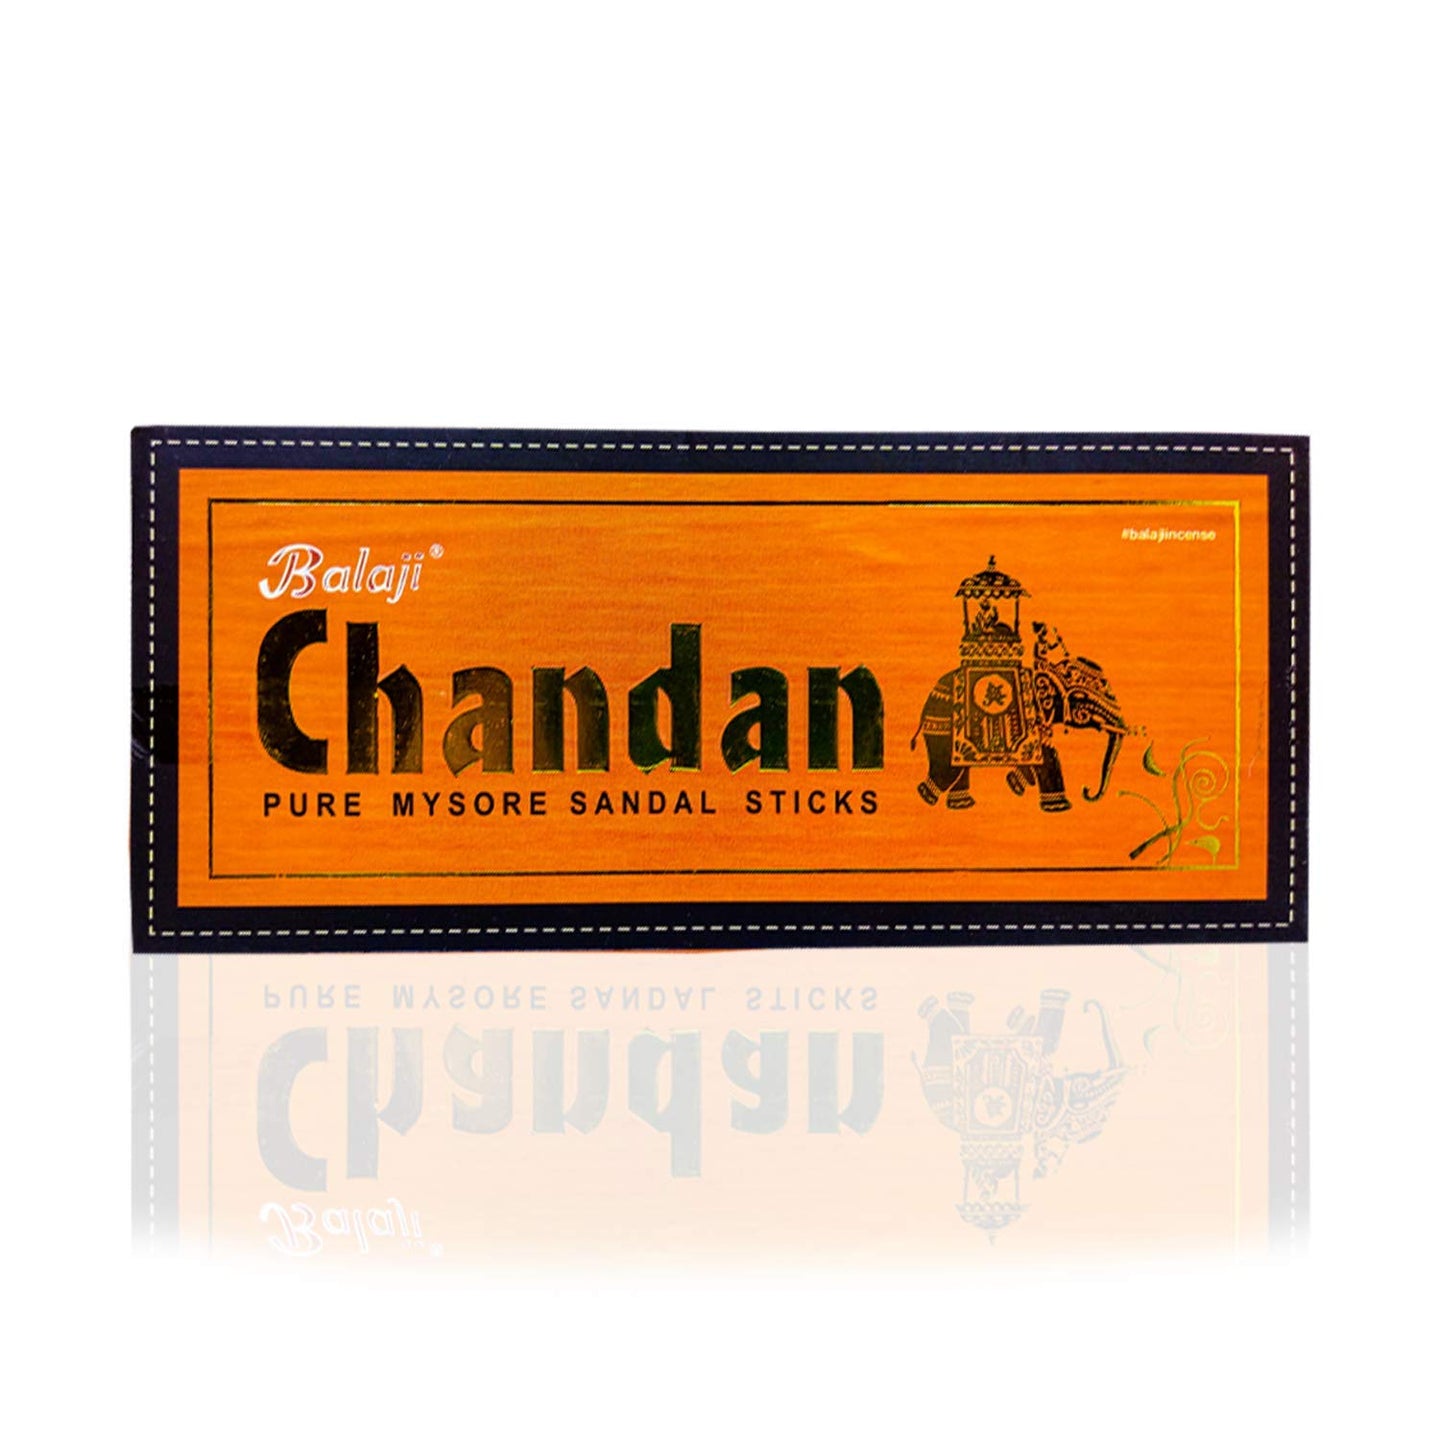 Combo of 6 Balaji Chandan Luxury Incense Sticks (25*6= 150 sticks)